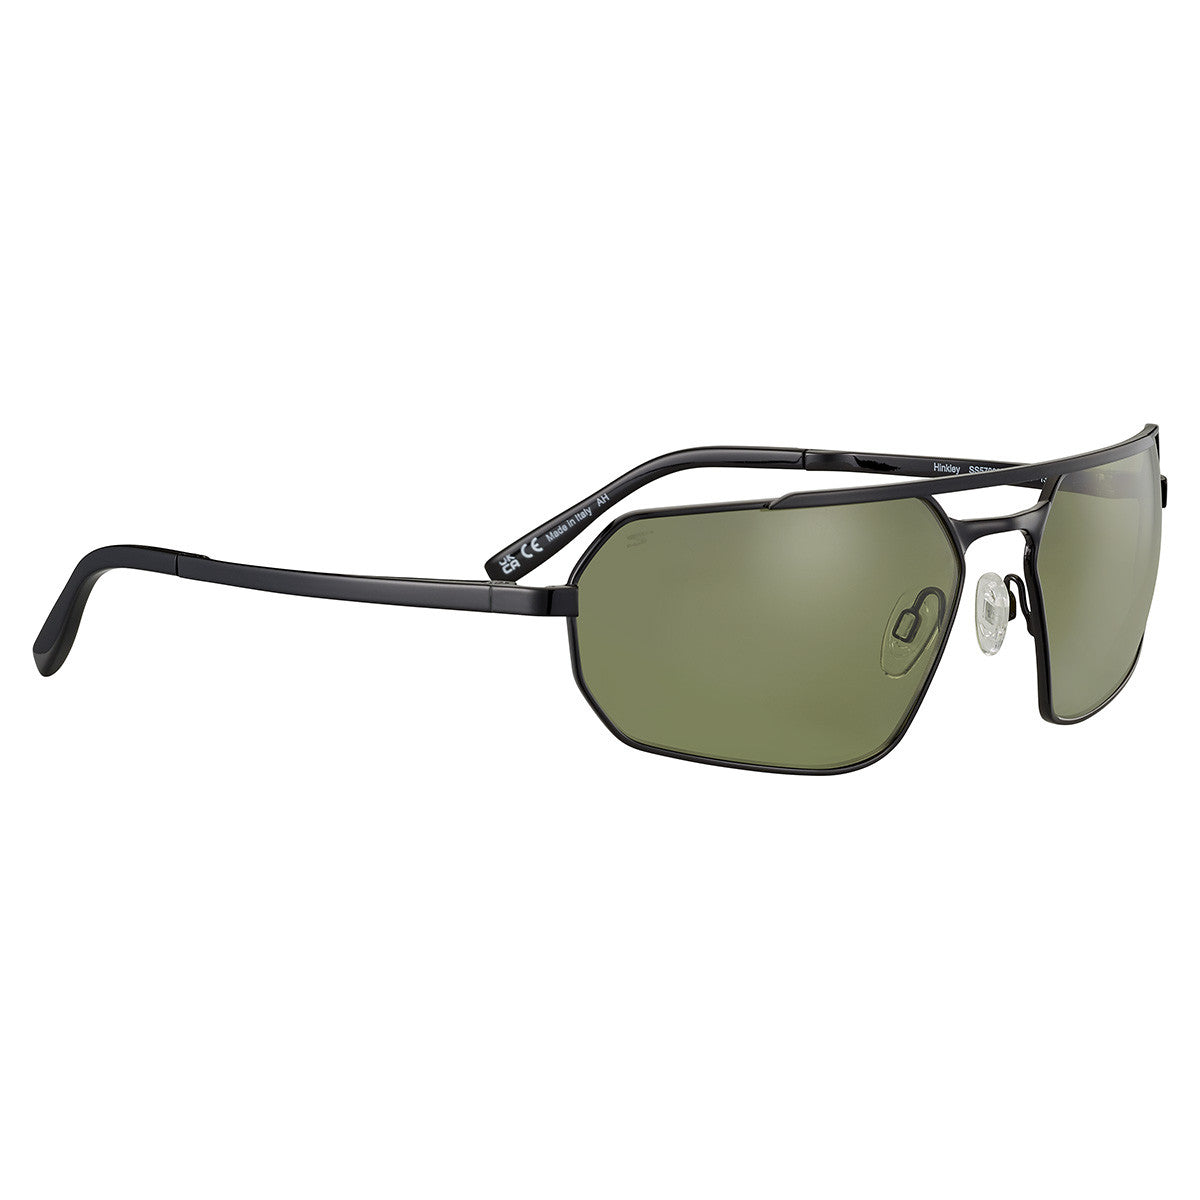 Serengeti Hinkley Sunglasses  Shiny Black Transparent Layer Medium-Large, Large